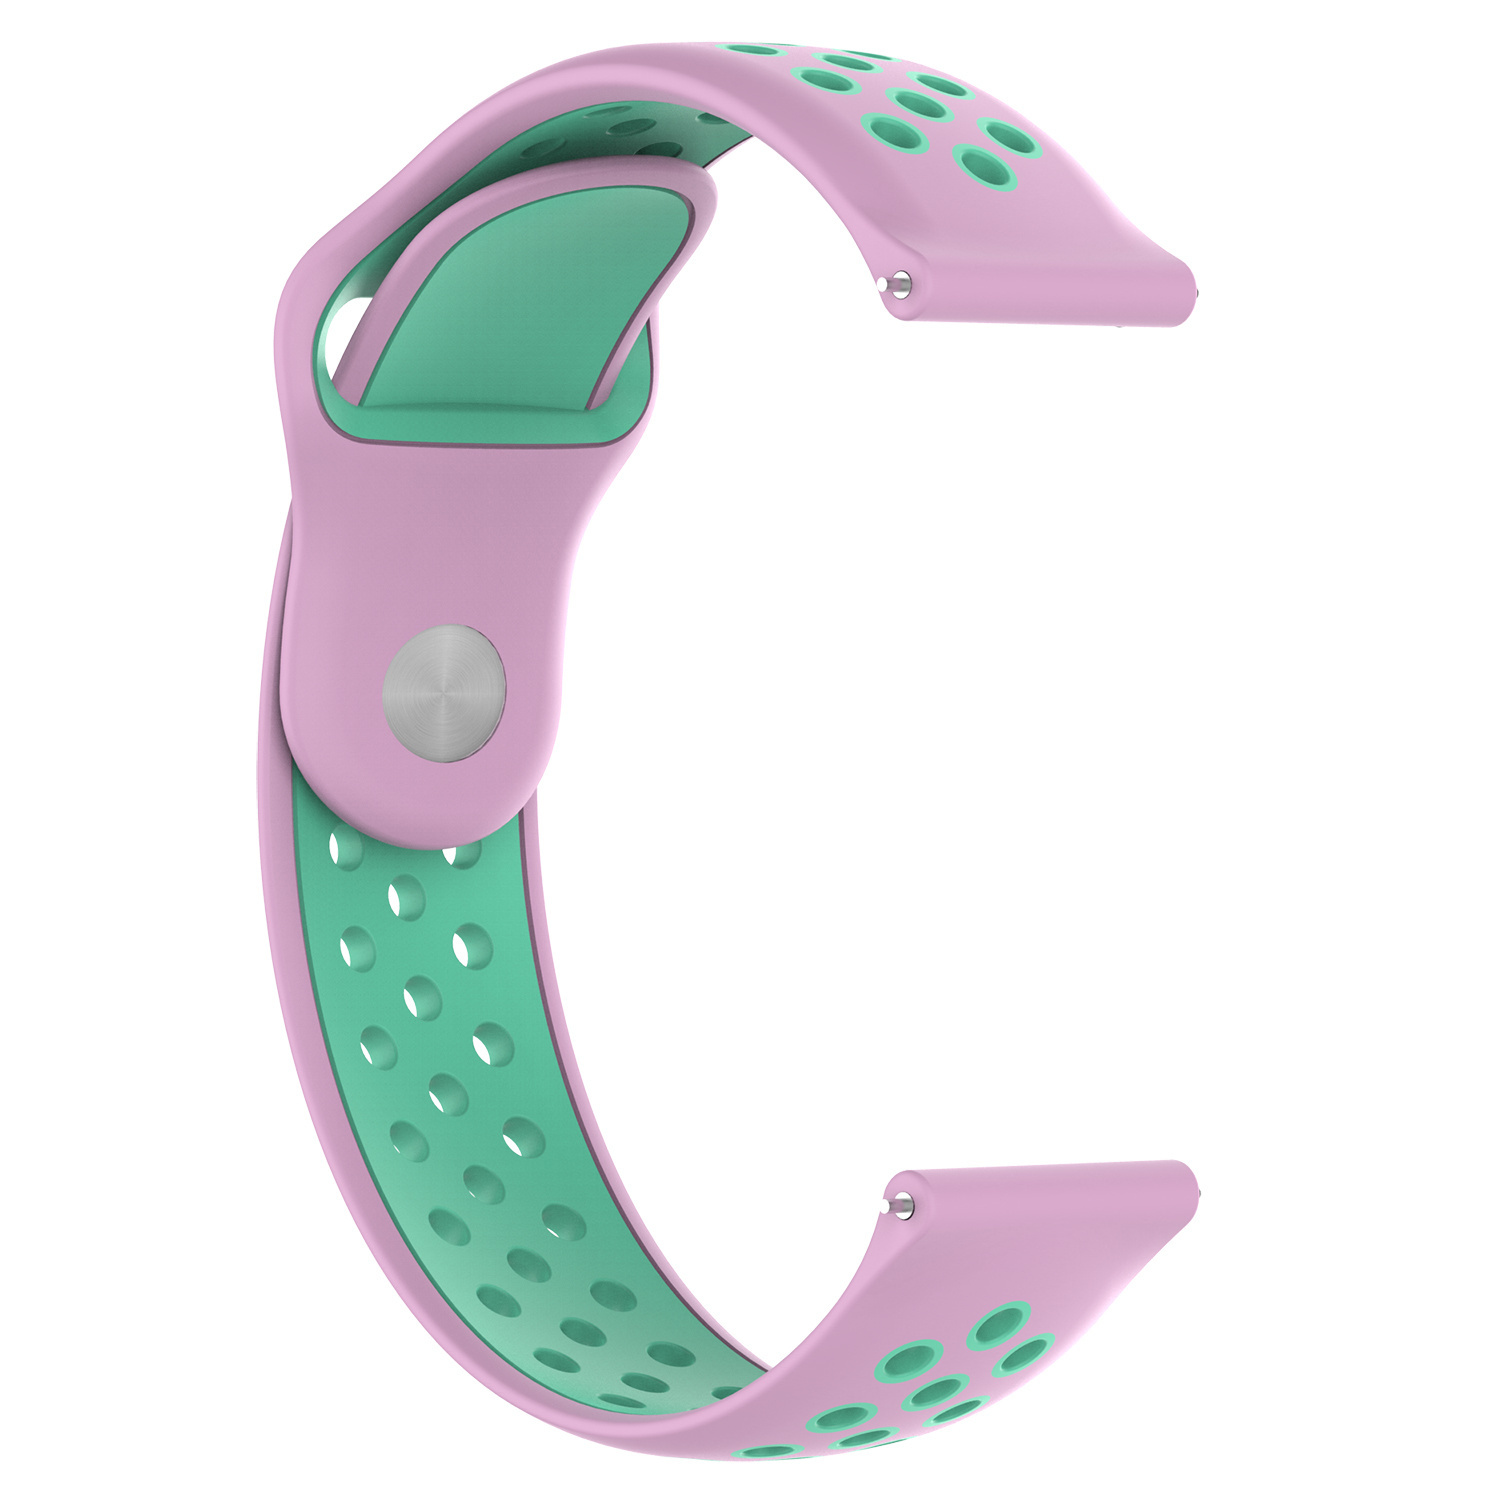 Huawei Watch GT dupla sport szalag - rózsaszín teal